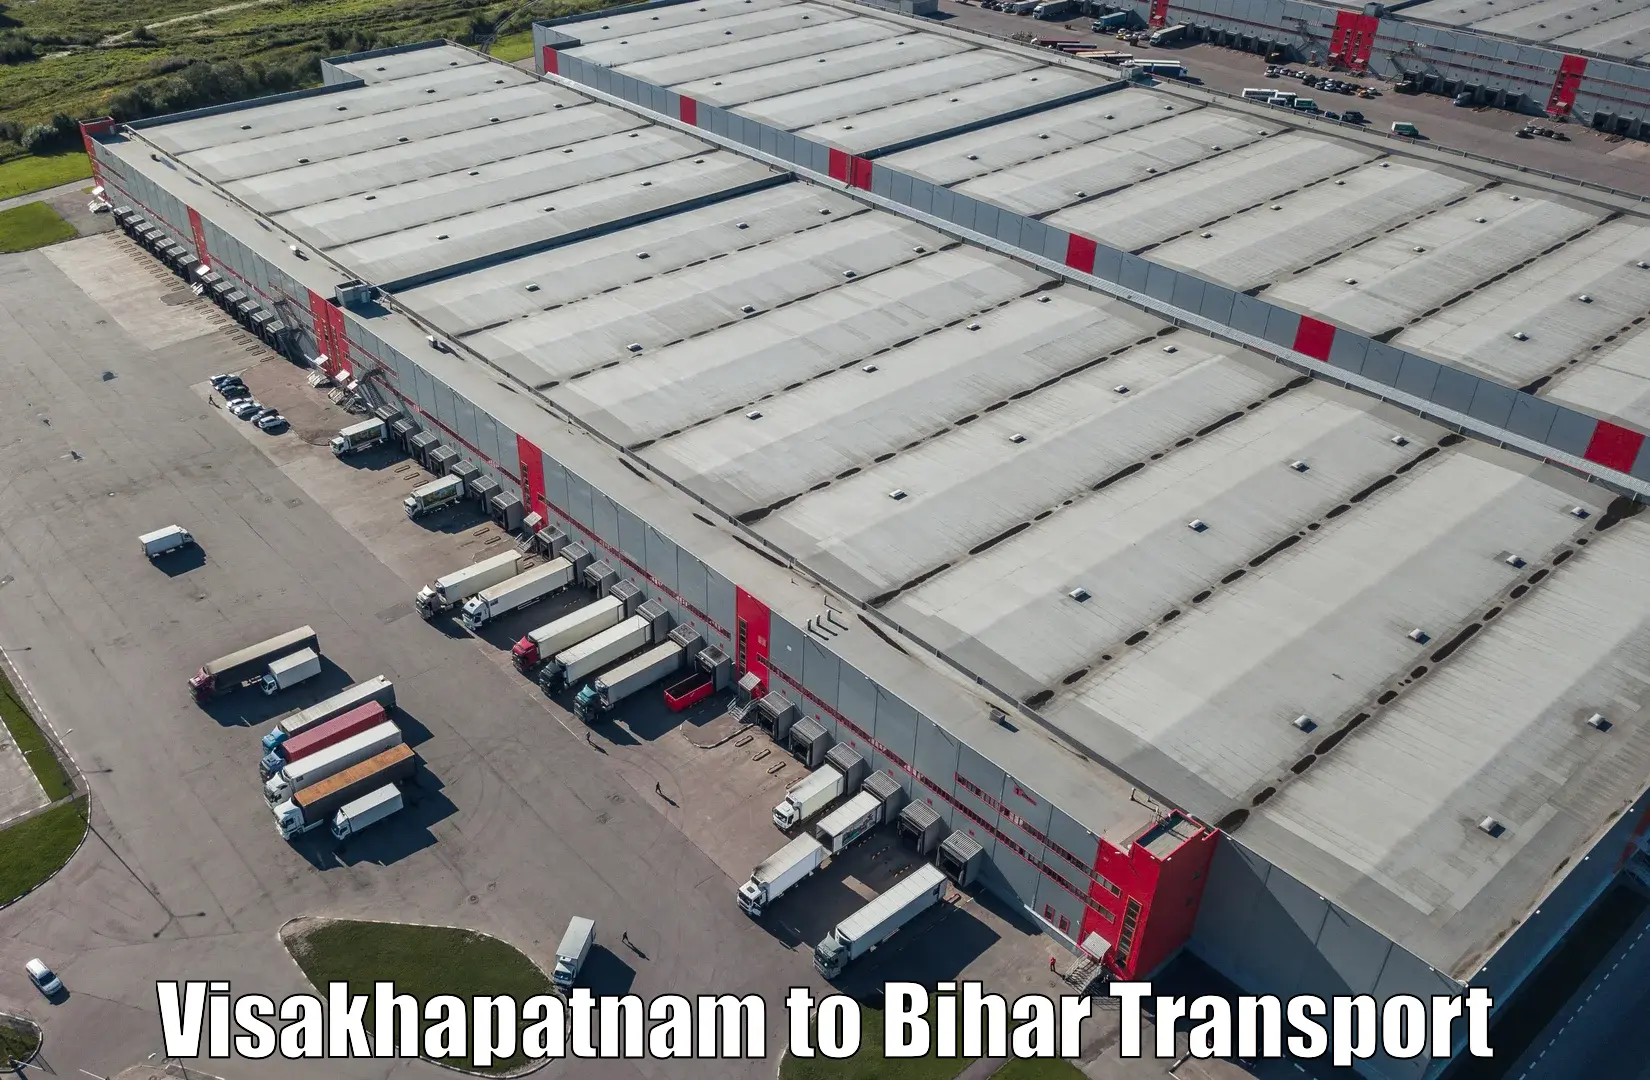 Online transport service Visakhapatnam to Fatwah